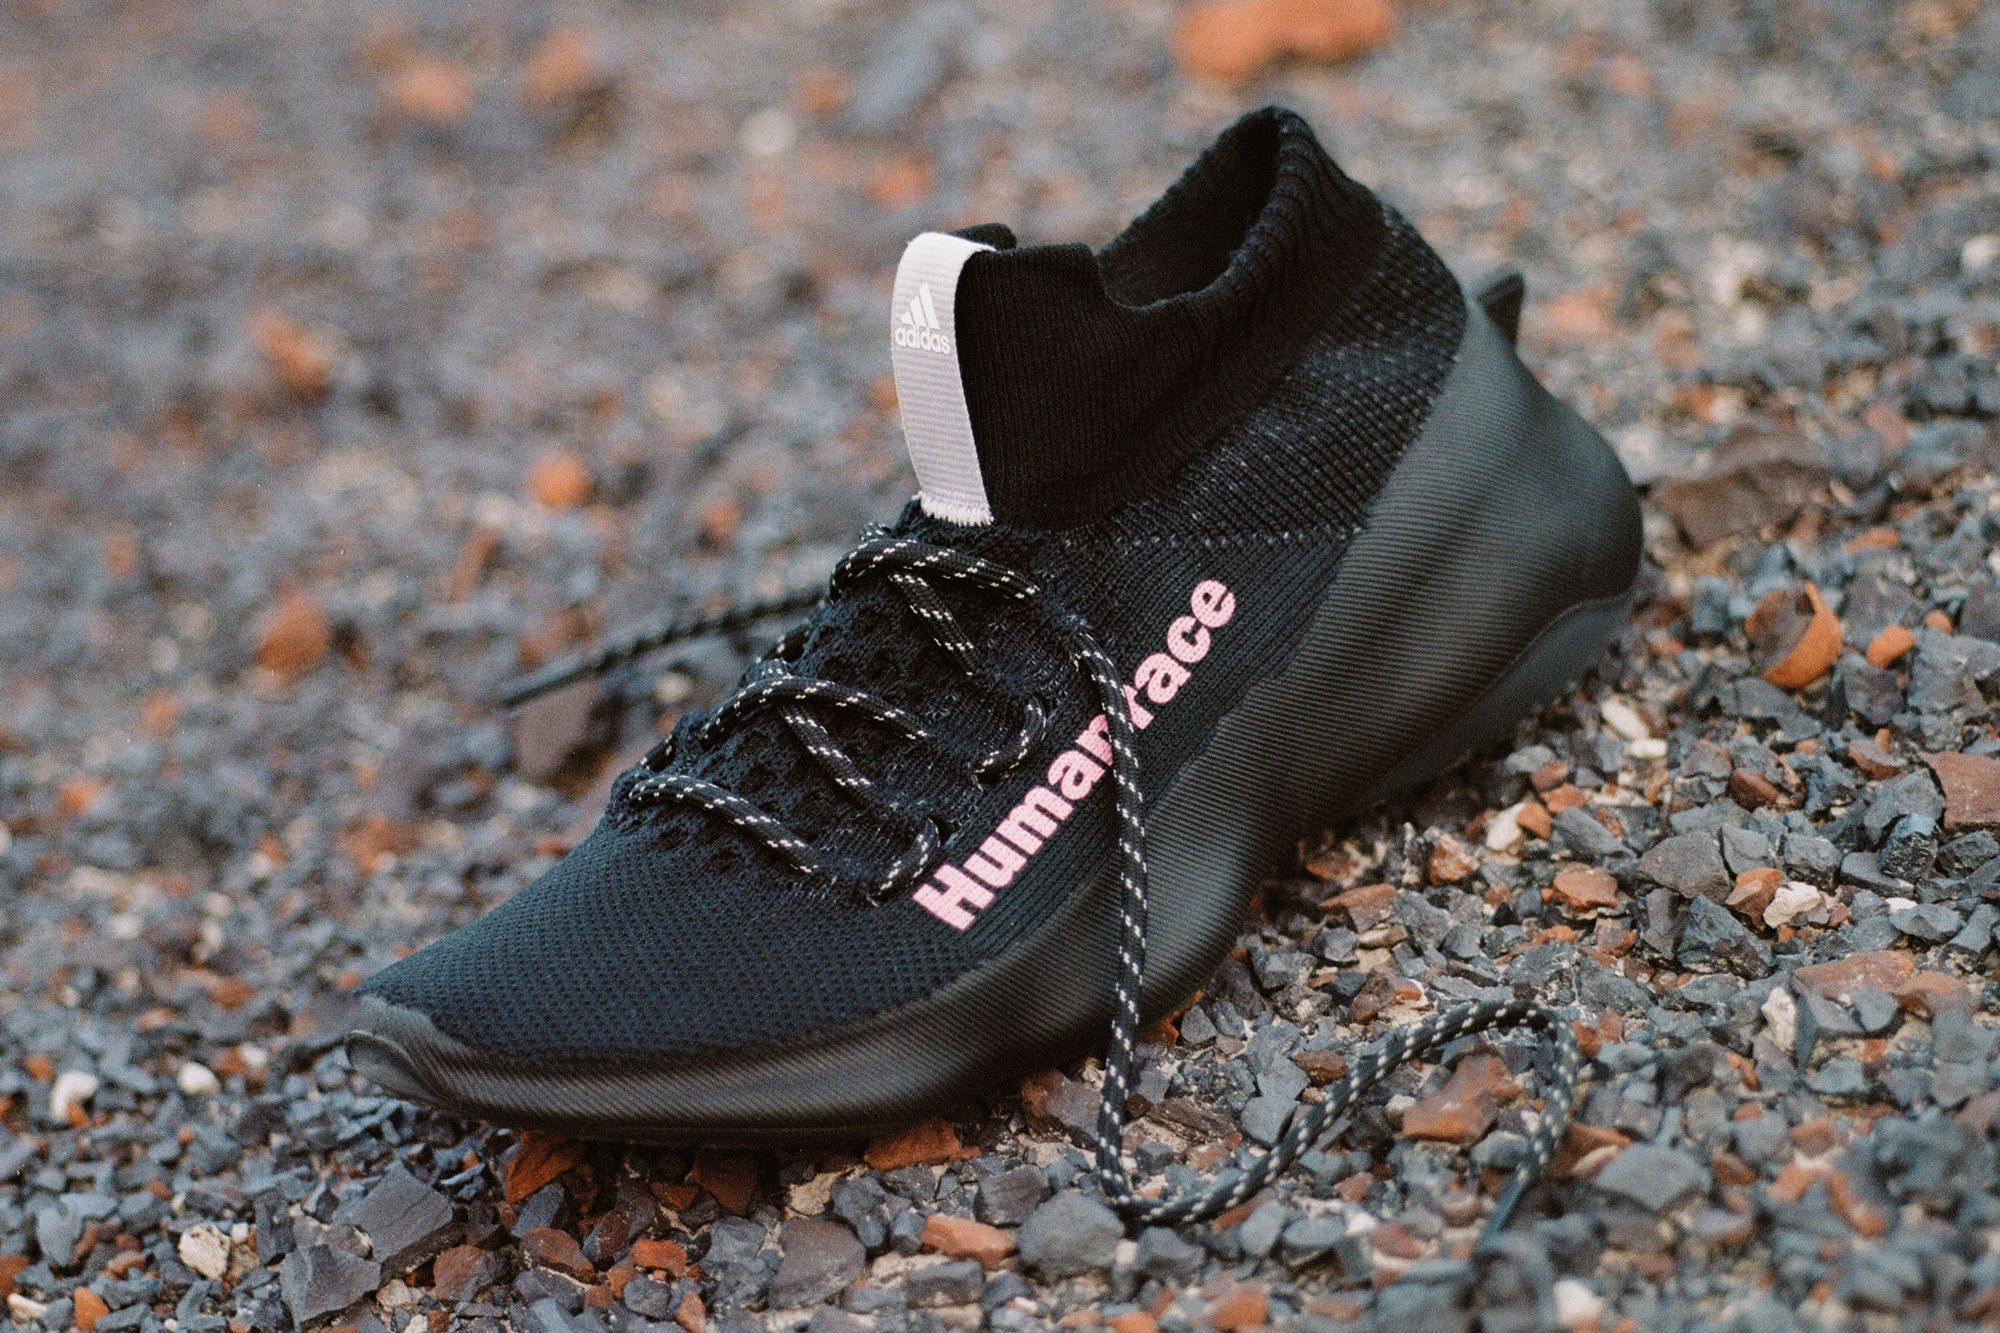 Pharrell x adidas Humanrace Sichona 'Core Black'